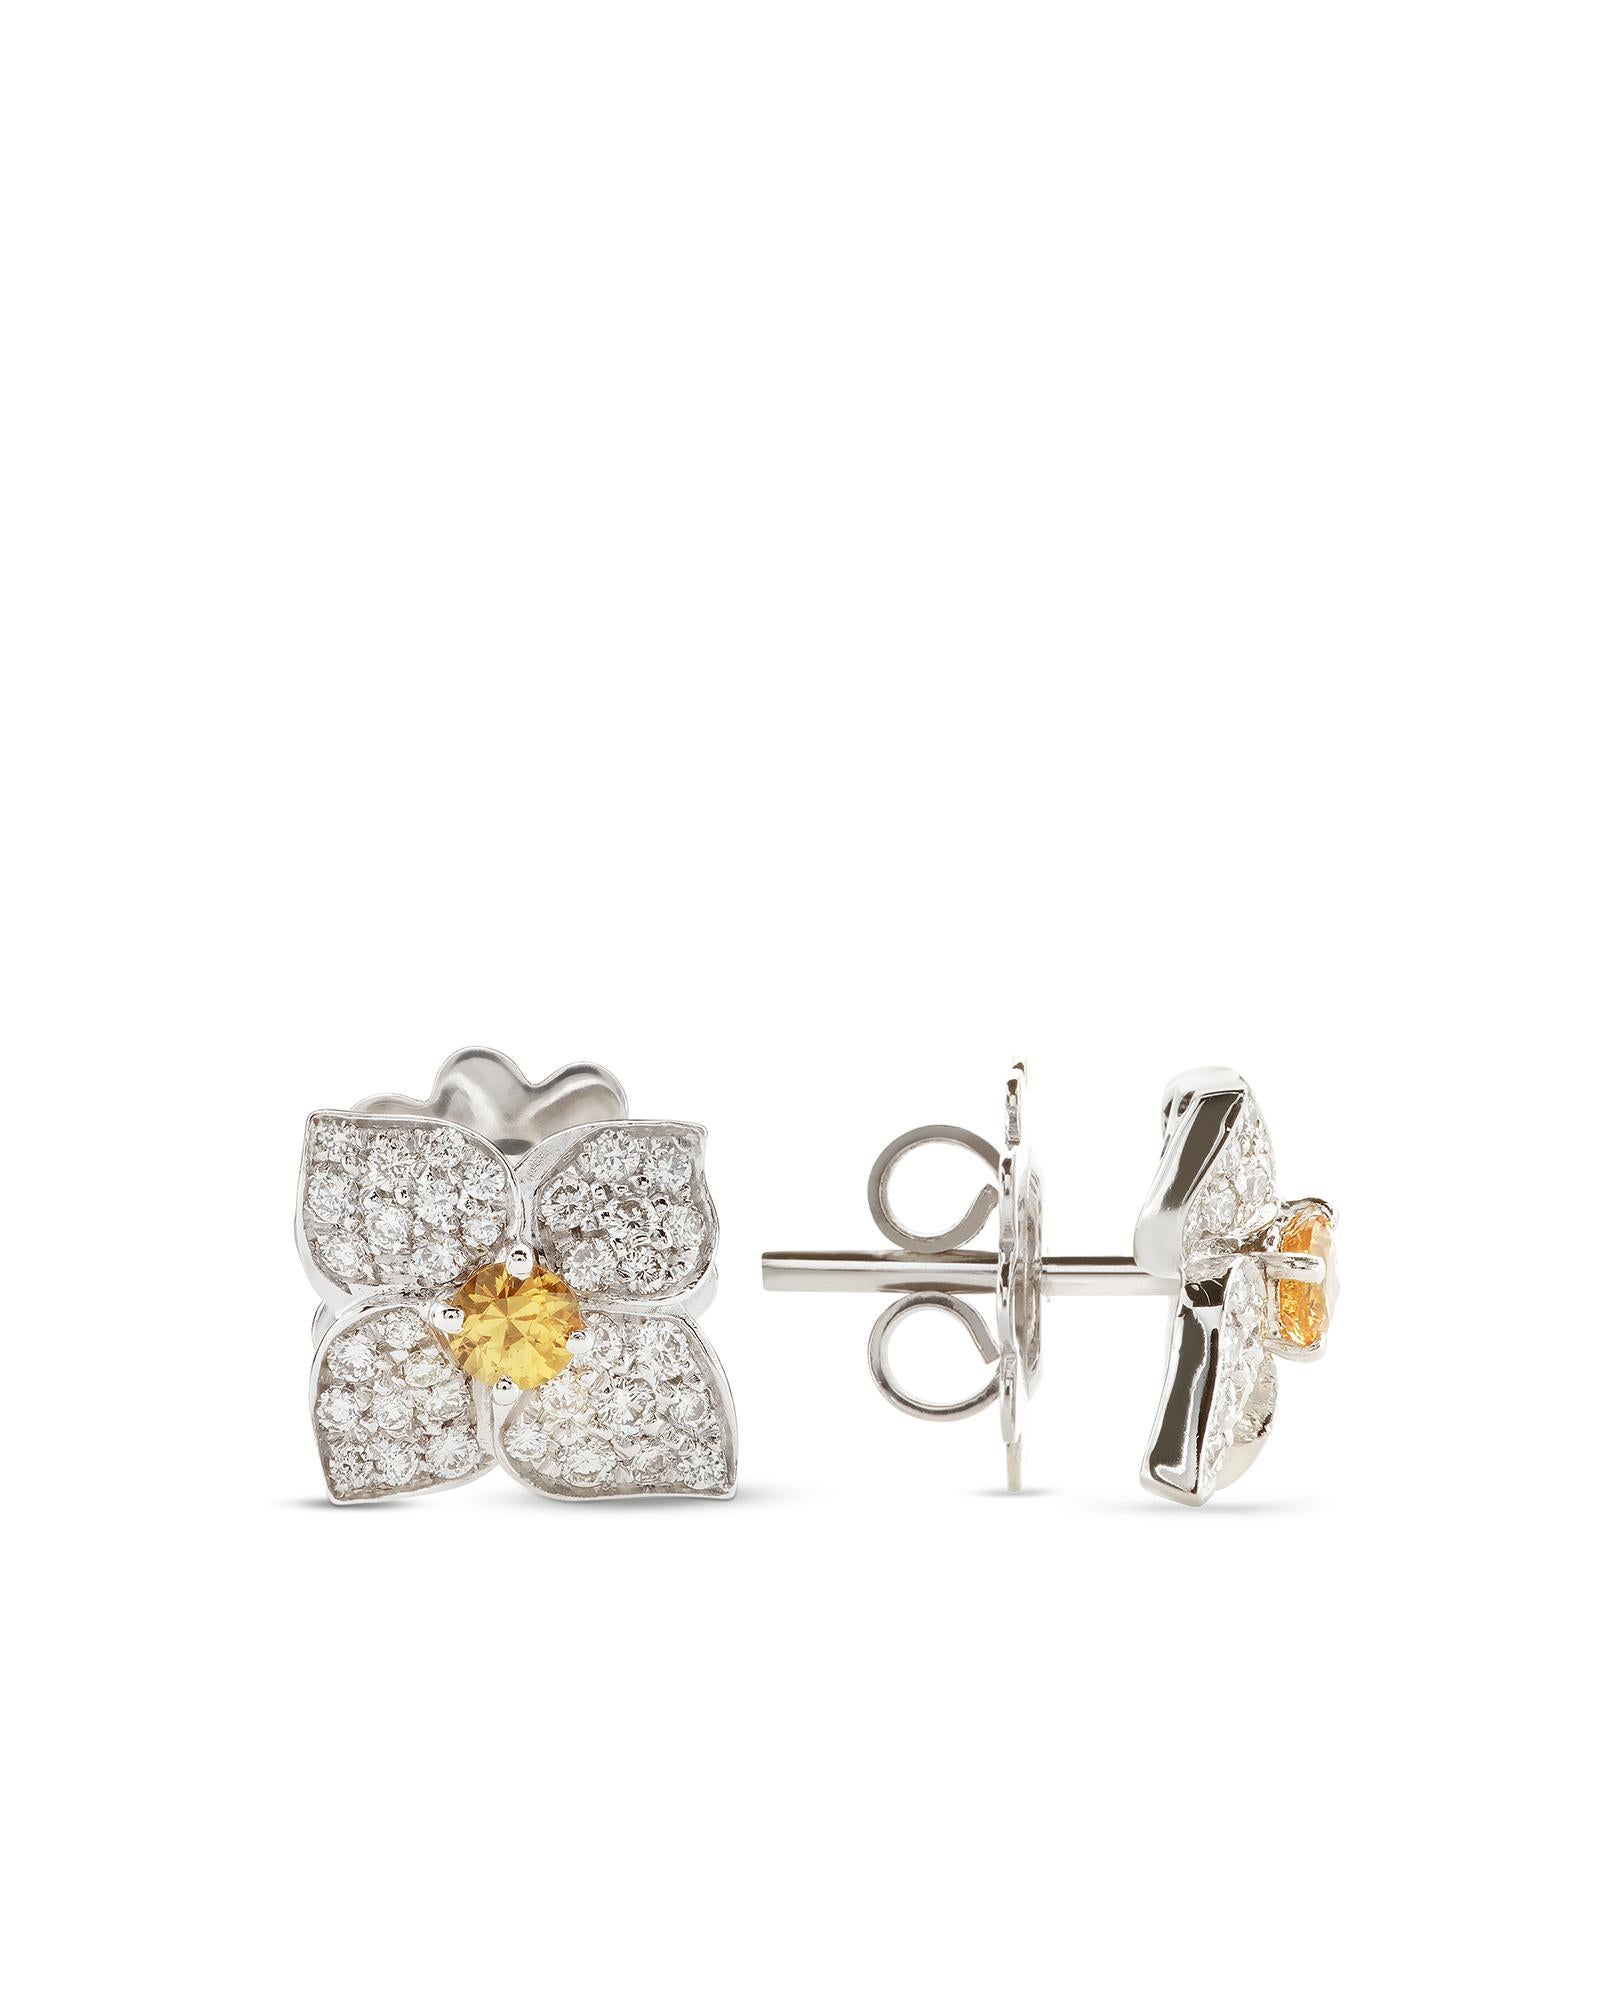 Brilliant Cut 18 Carat White Gold, Diamonds and Yellow Sapphires, Ortensia Earrings Leonori For Sale